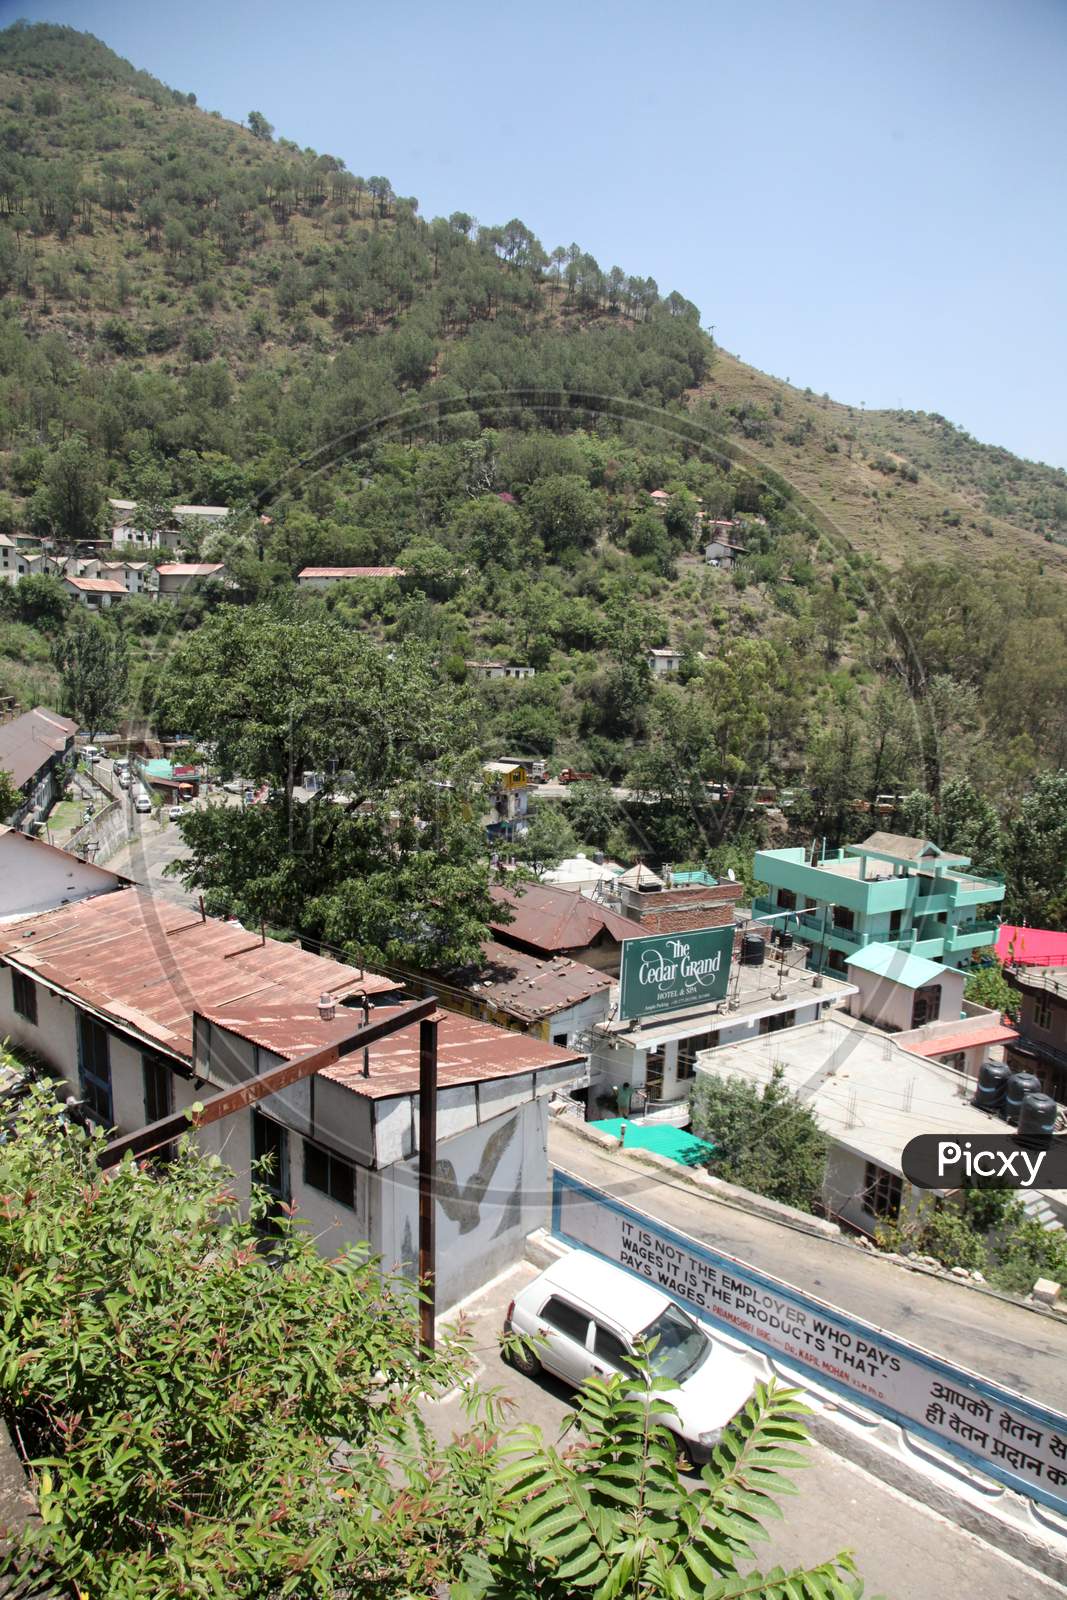 Houses on Mountains in Kumarhatti, Himachal Pradesh